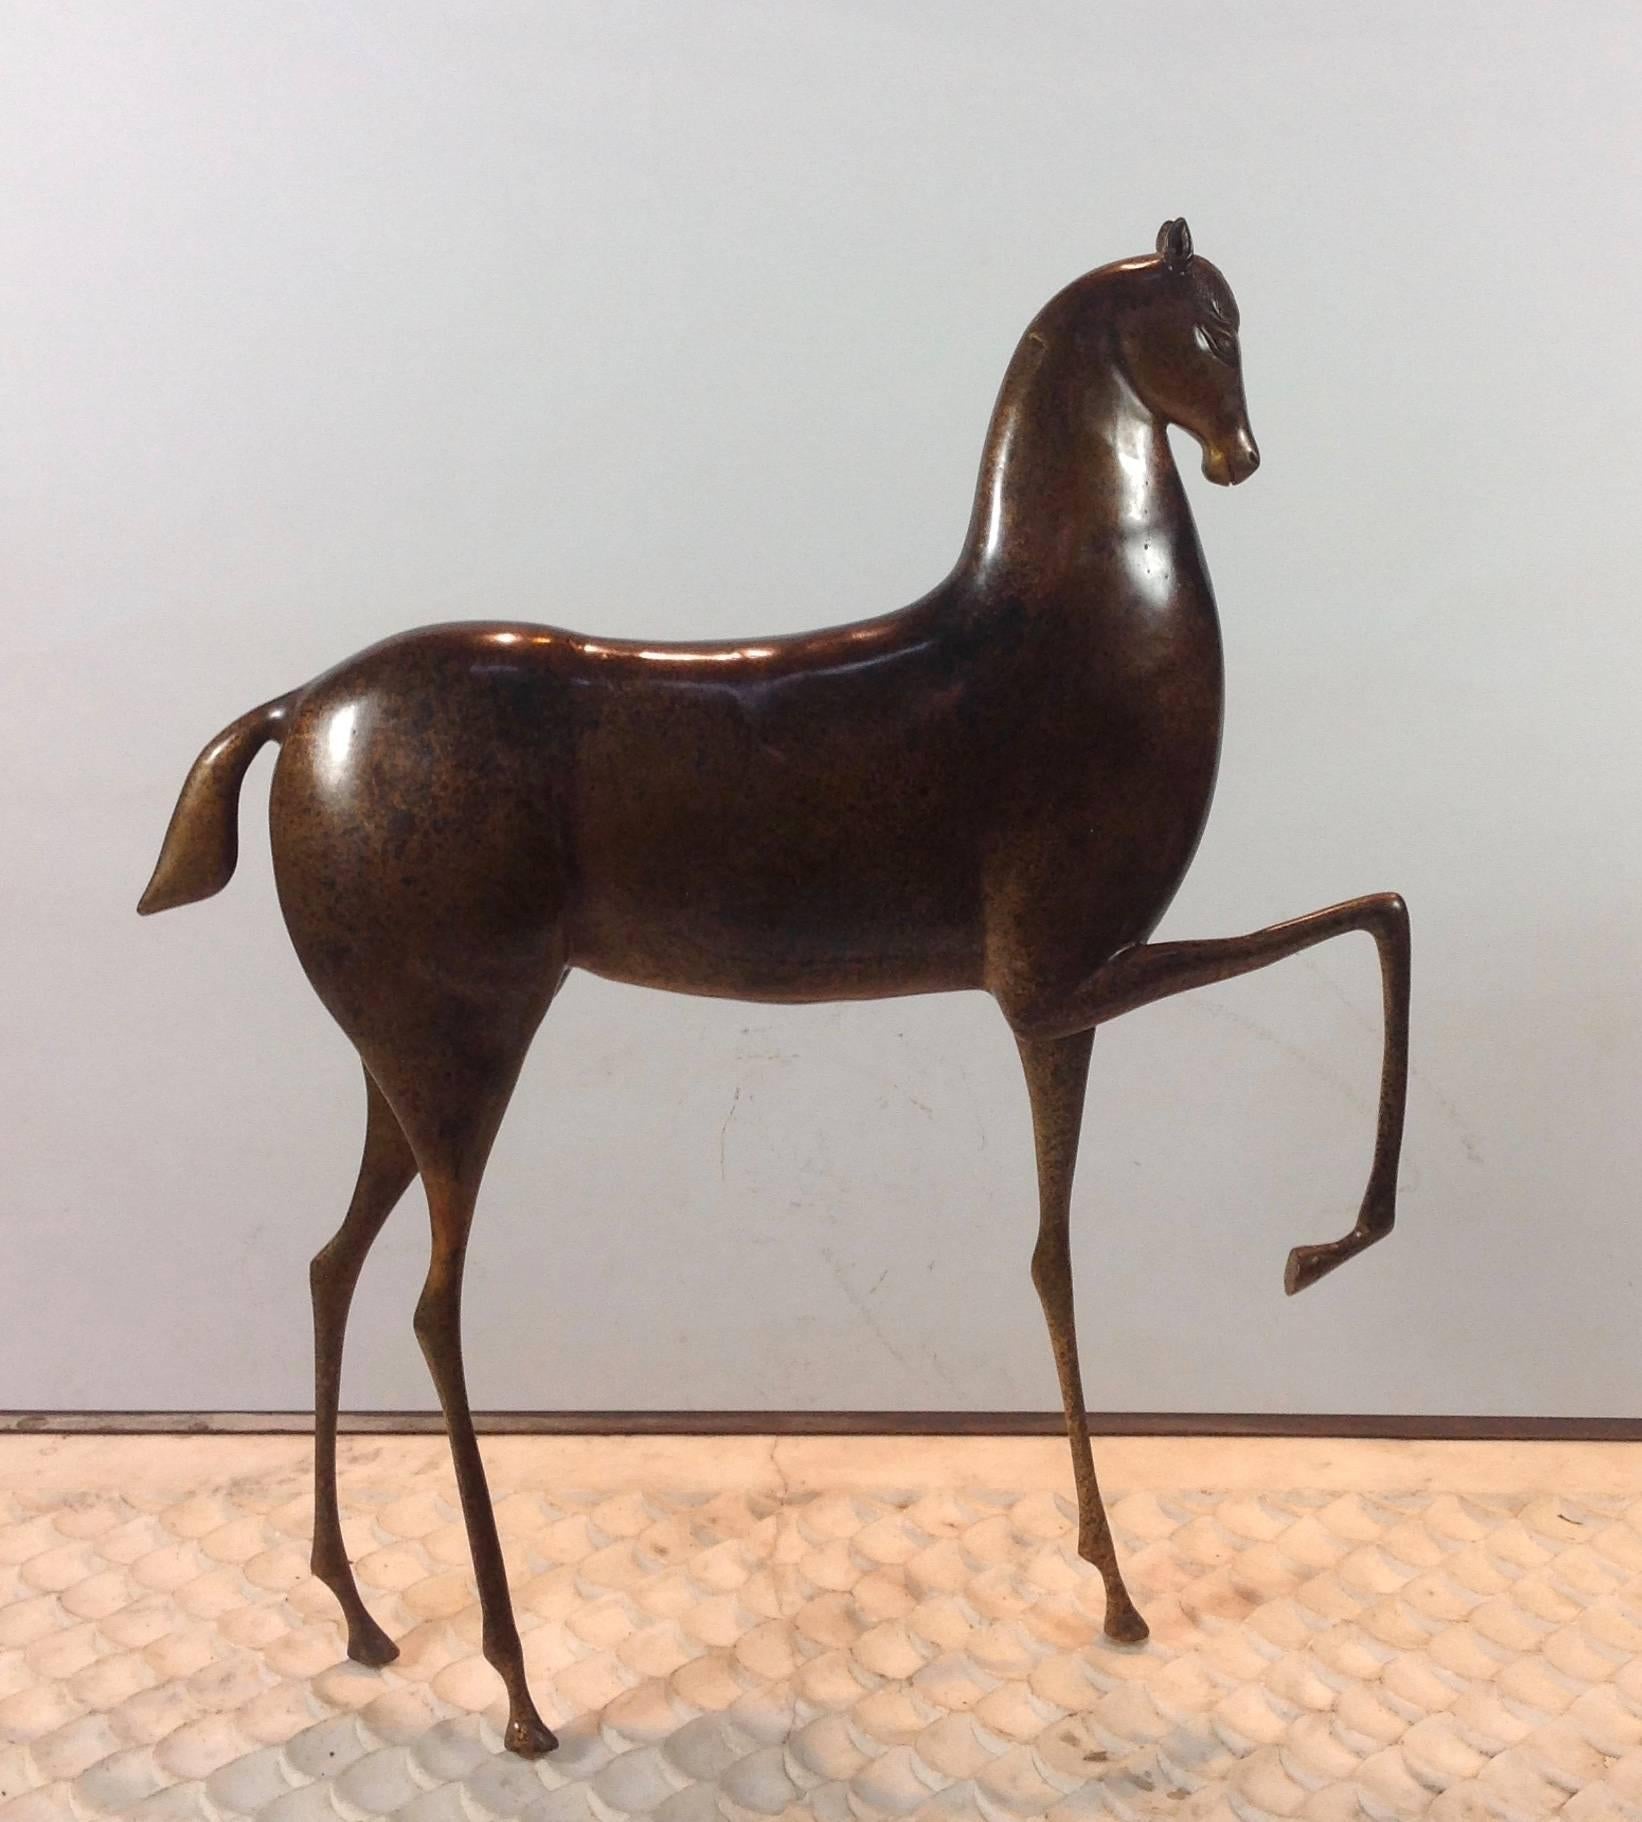 Stunning bronze Art Deco style horse by California design icon Luciano Tempo.